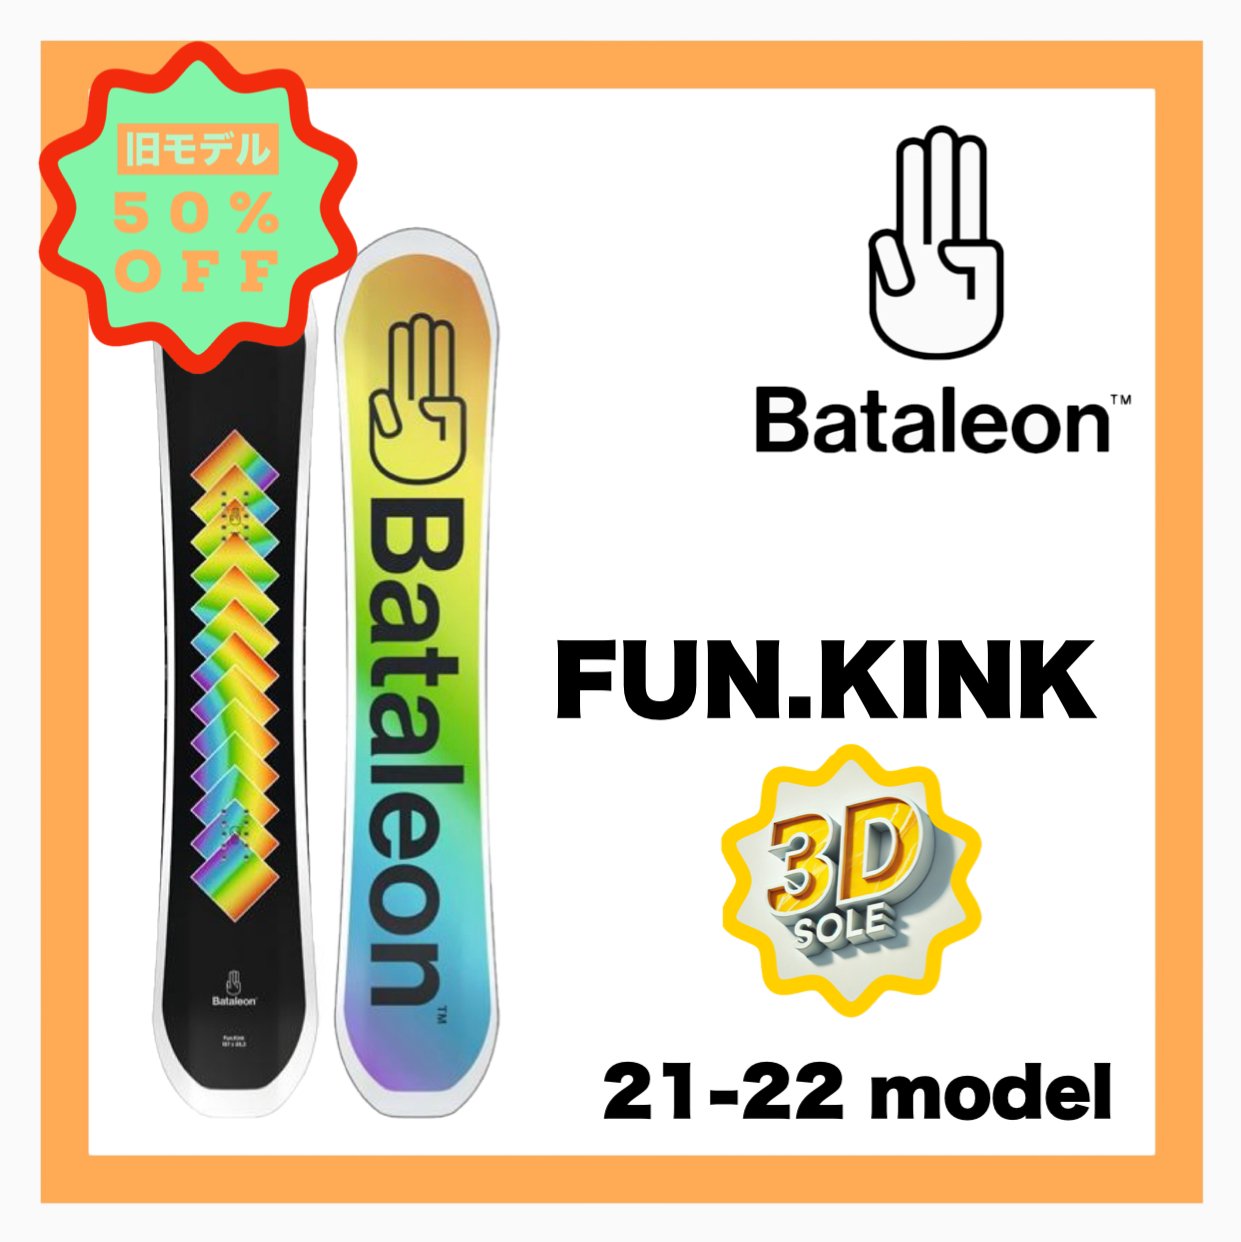 BATALEON【Fun.kink】 - JOINT HOUSE